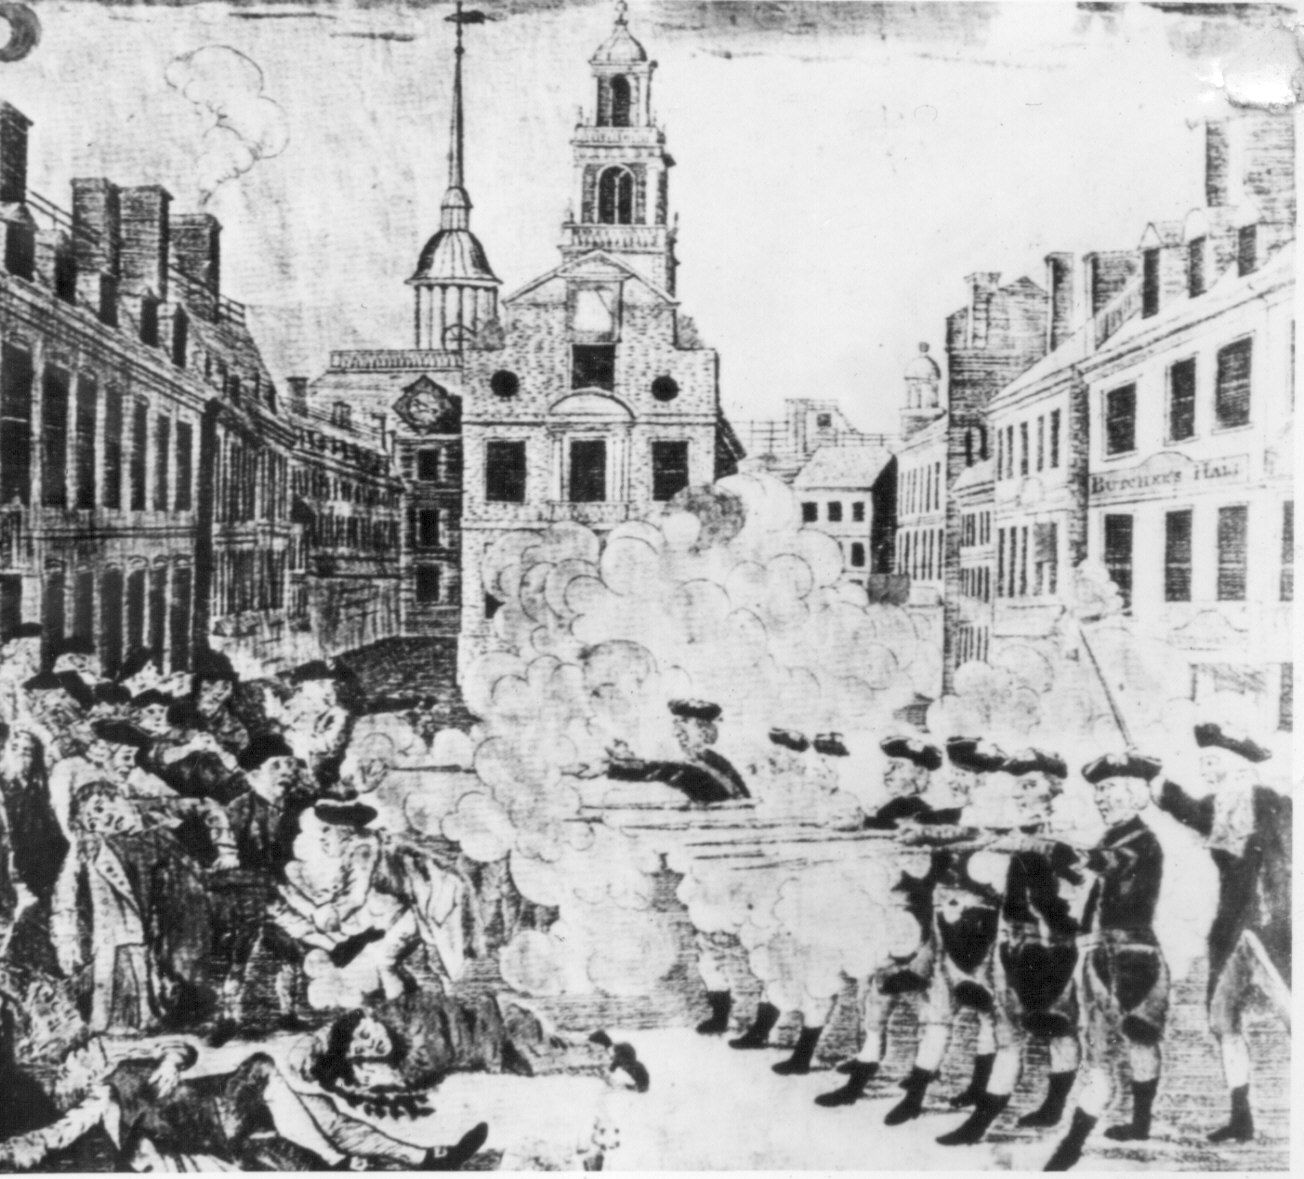 image of the Revolutionary War